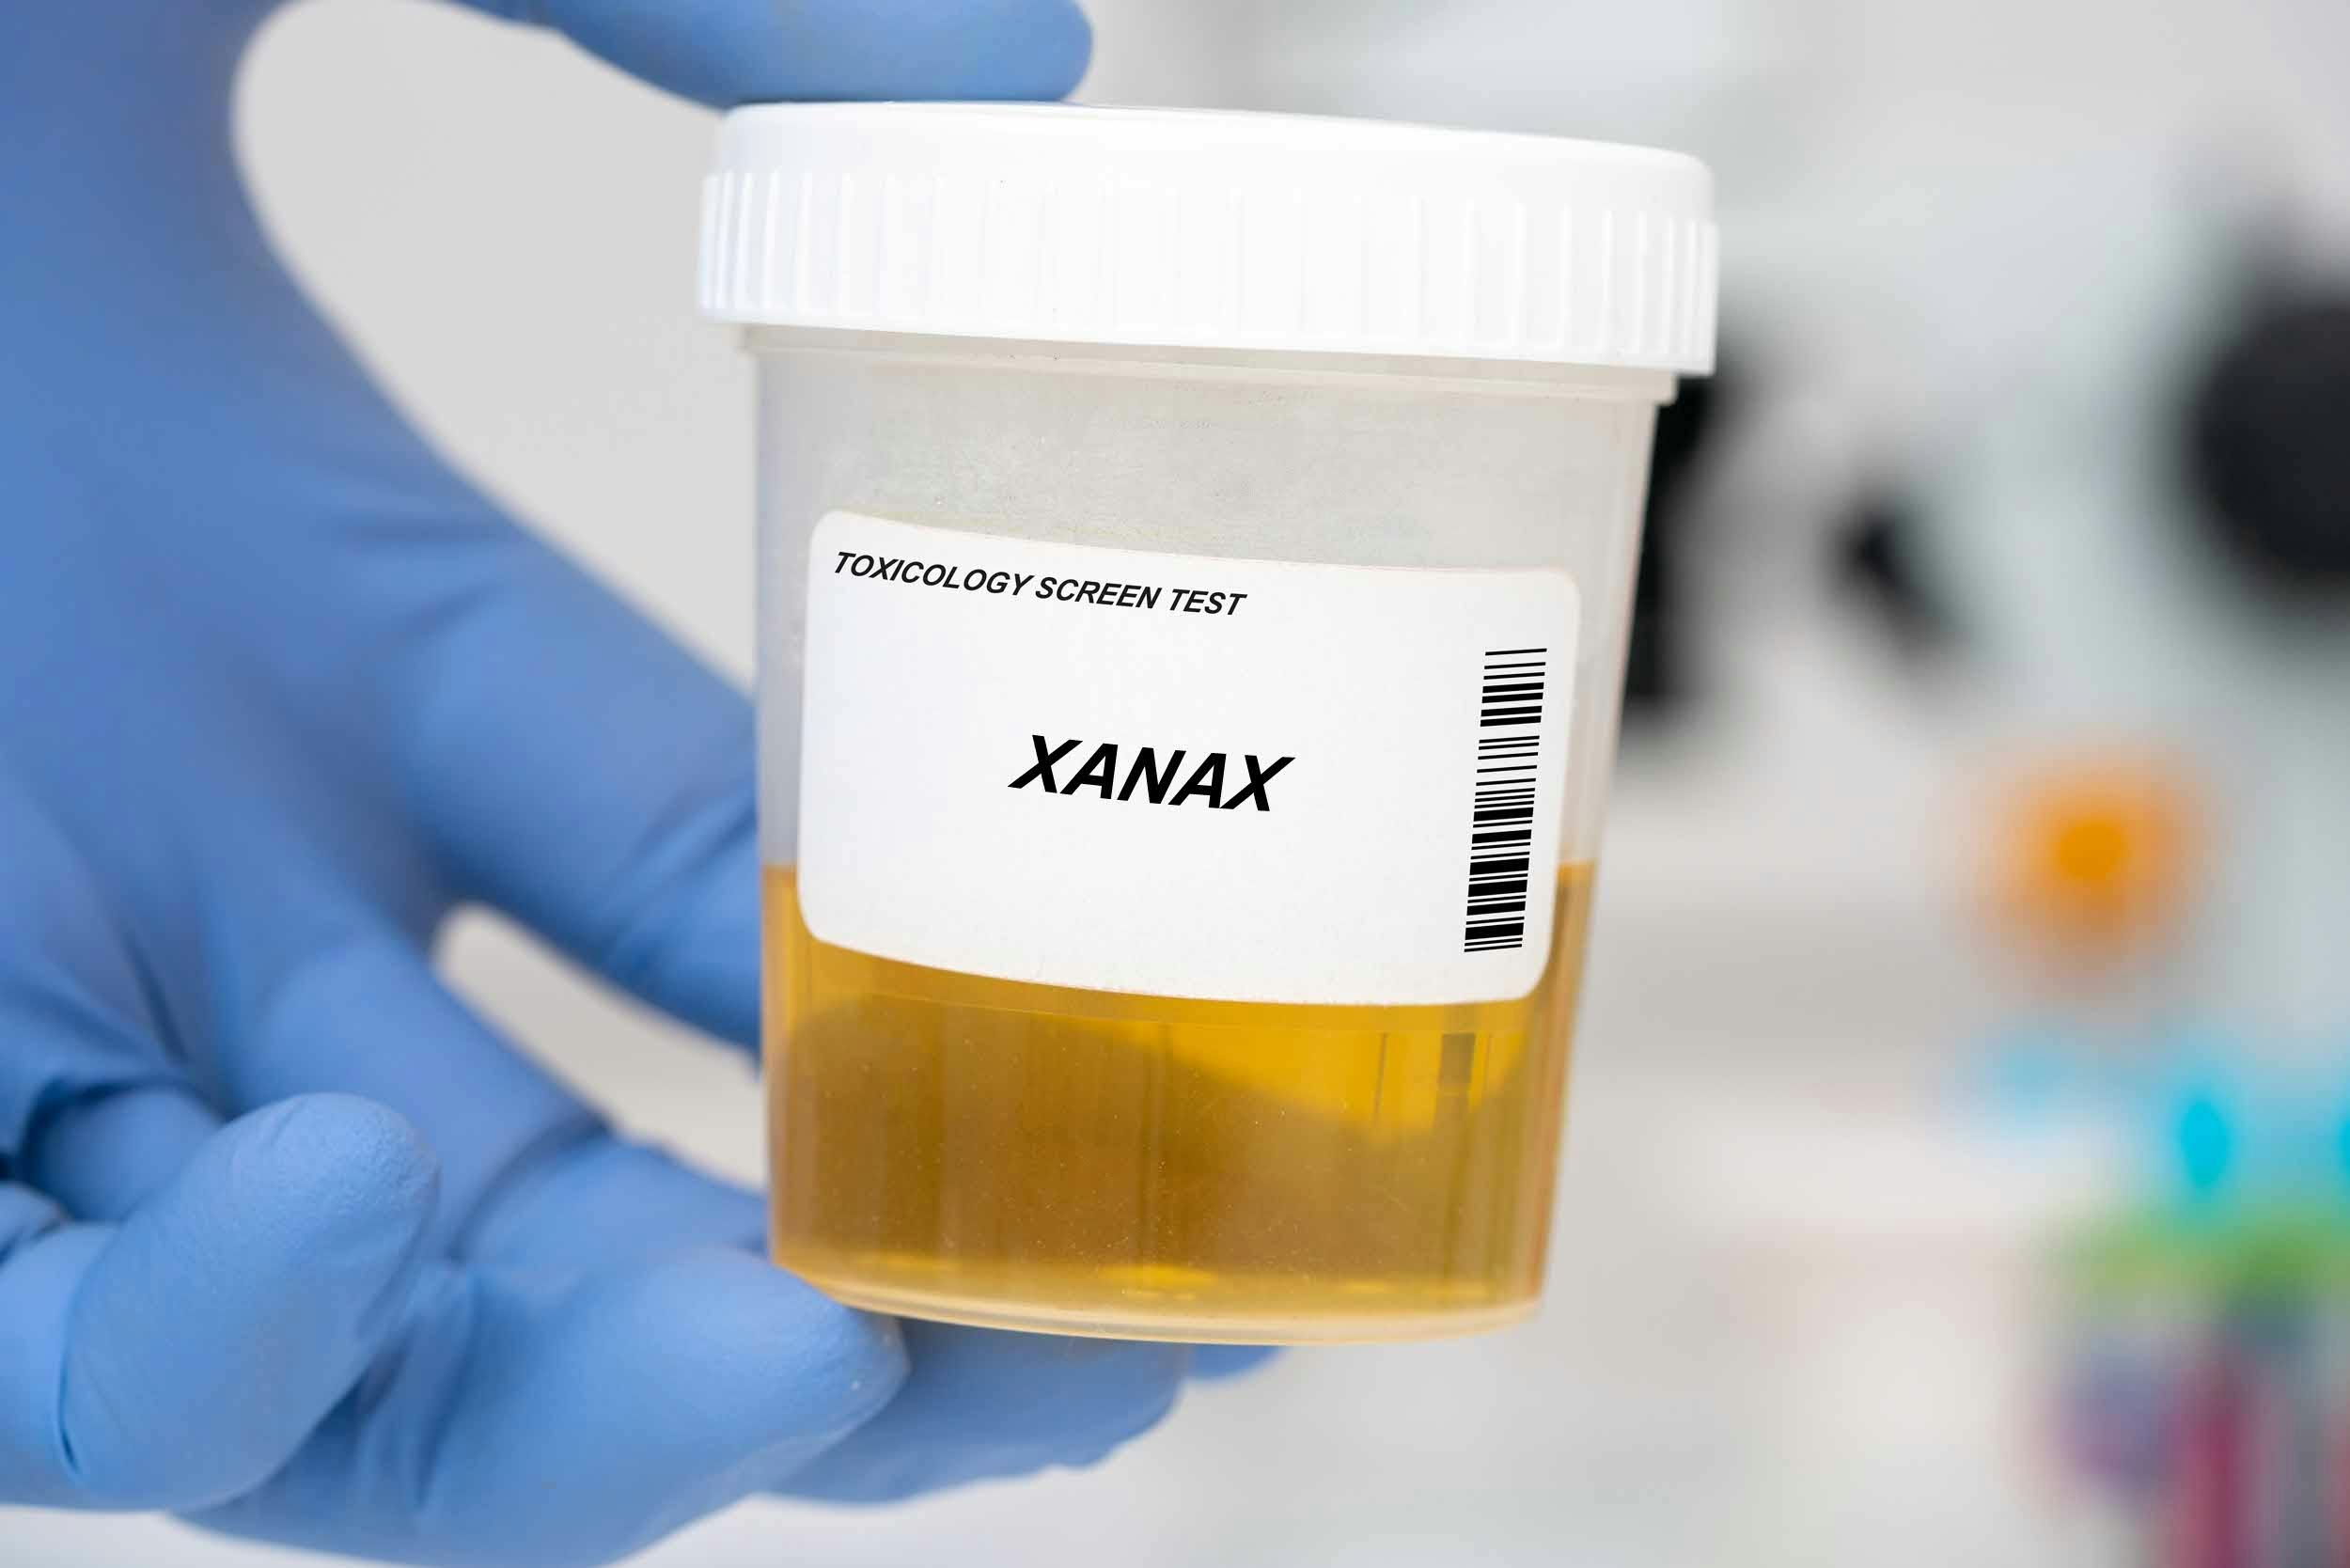 xanax urinalysis drug test